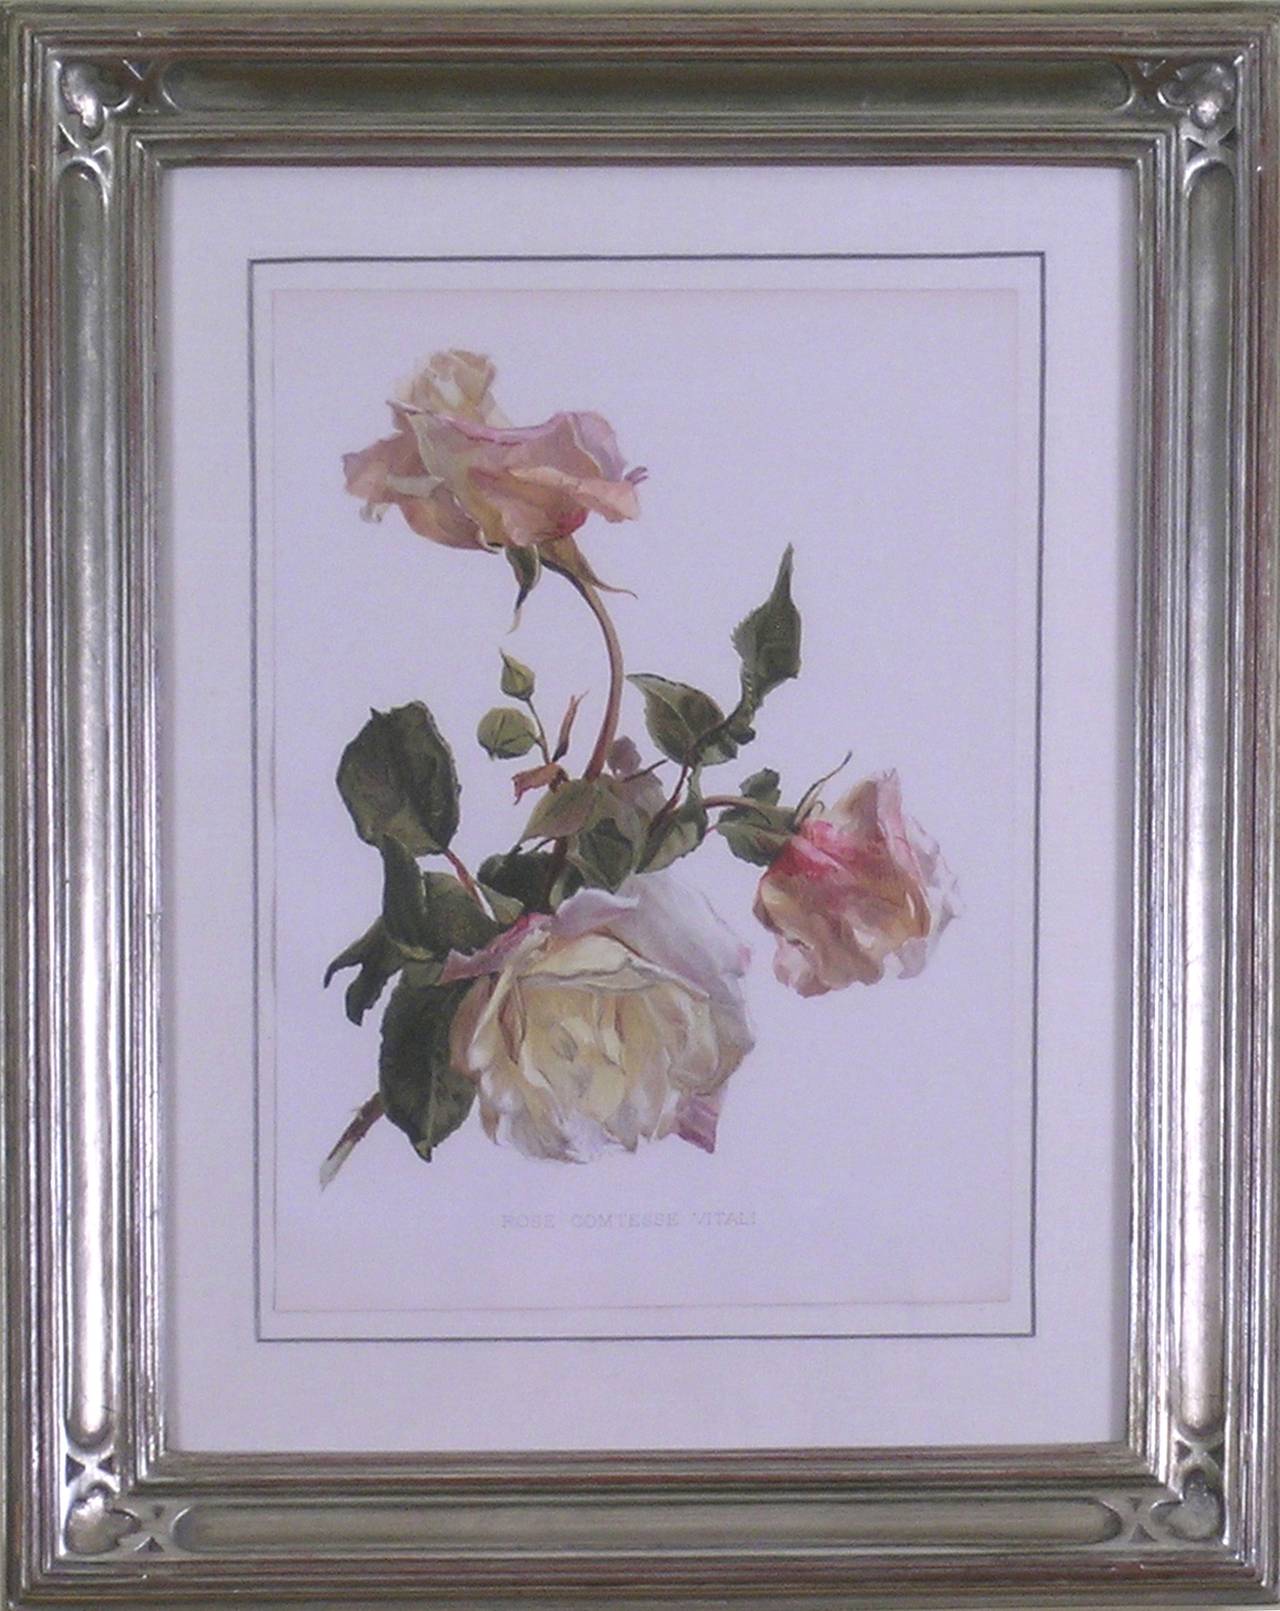 Rose Comtese Vital - Print by Henry George Moon